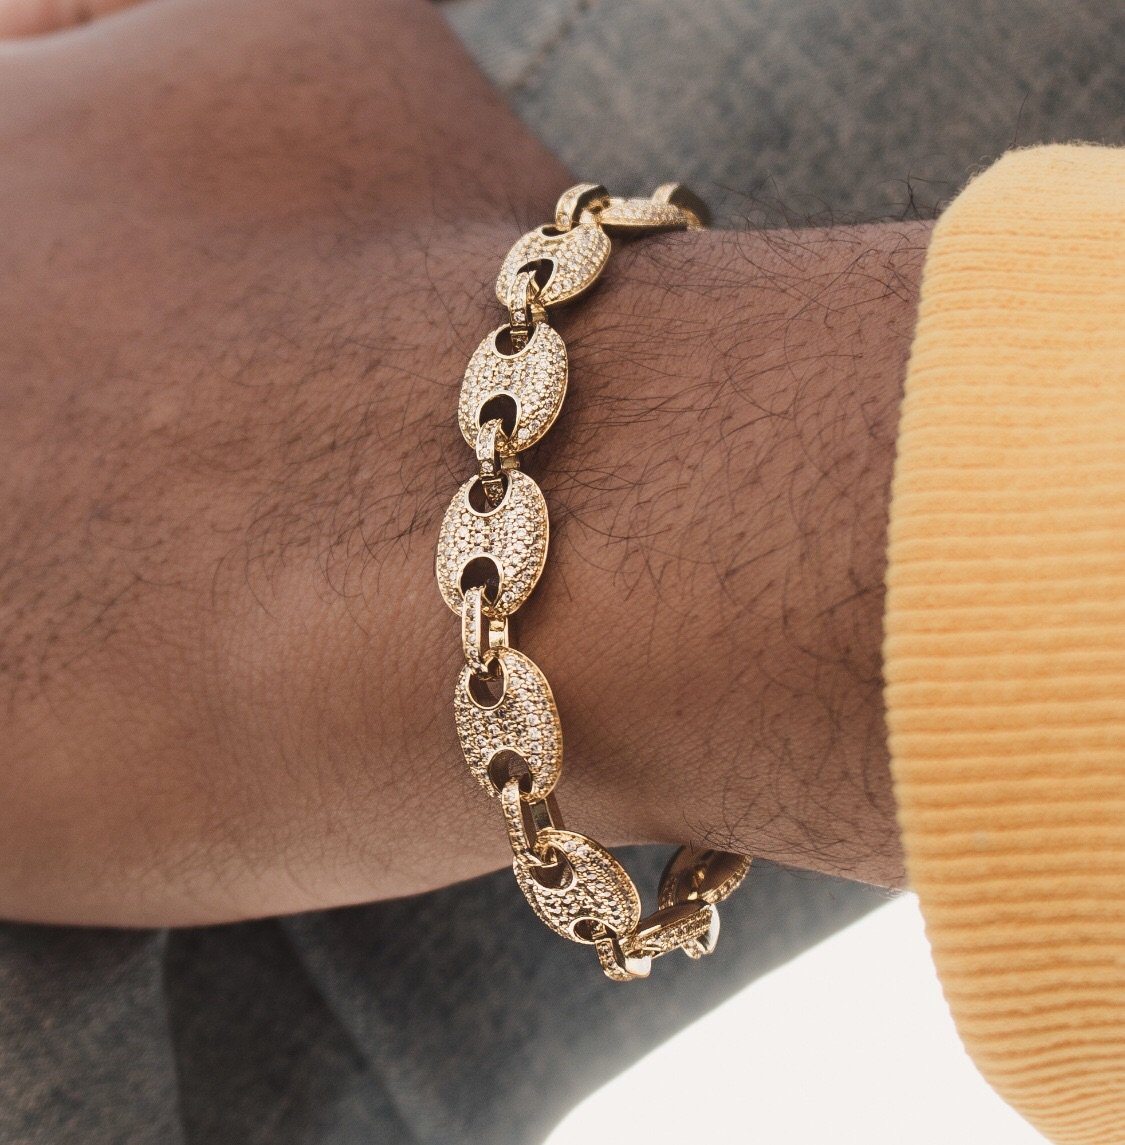 10k gucci link bracelet